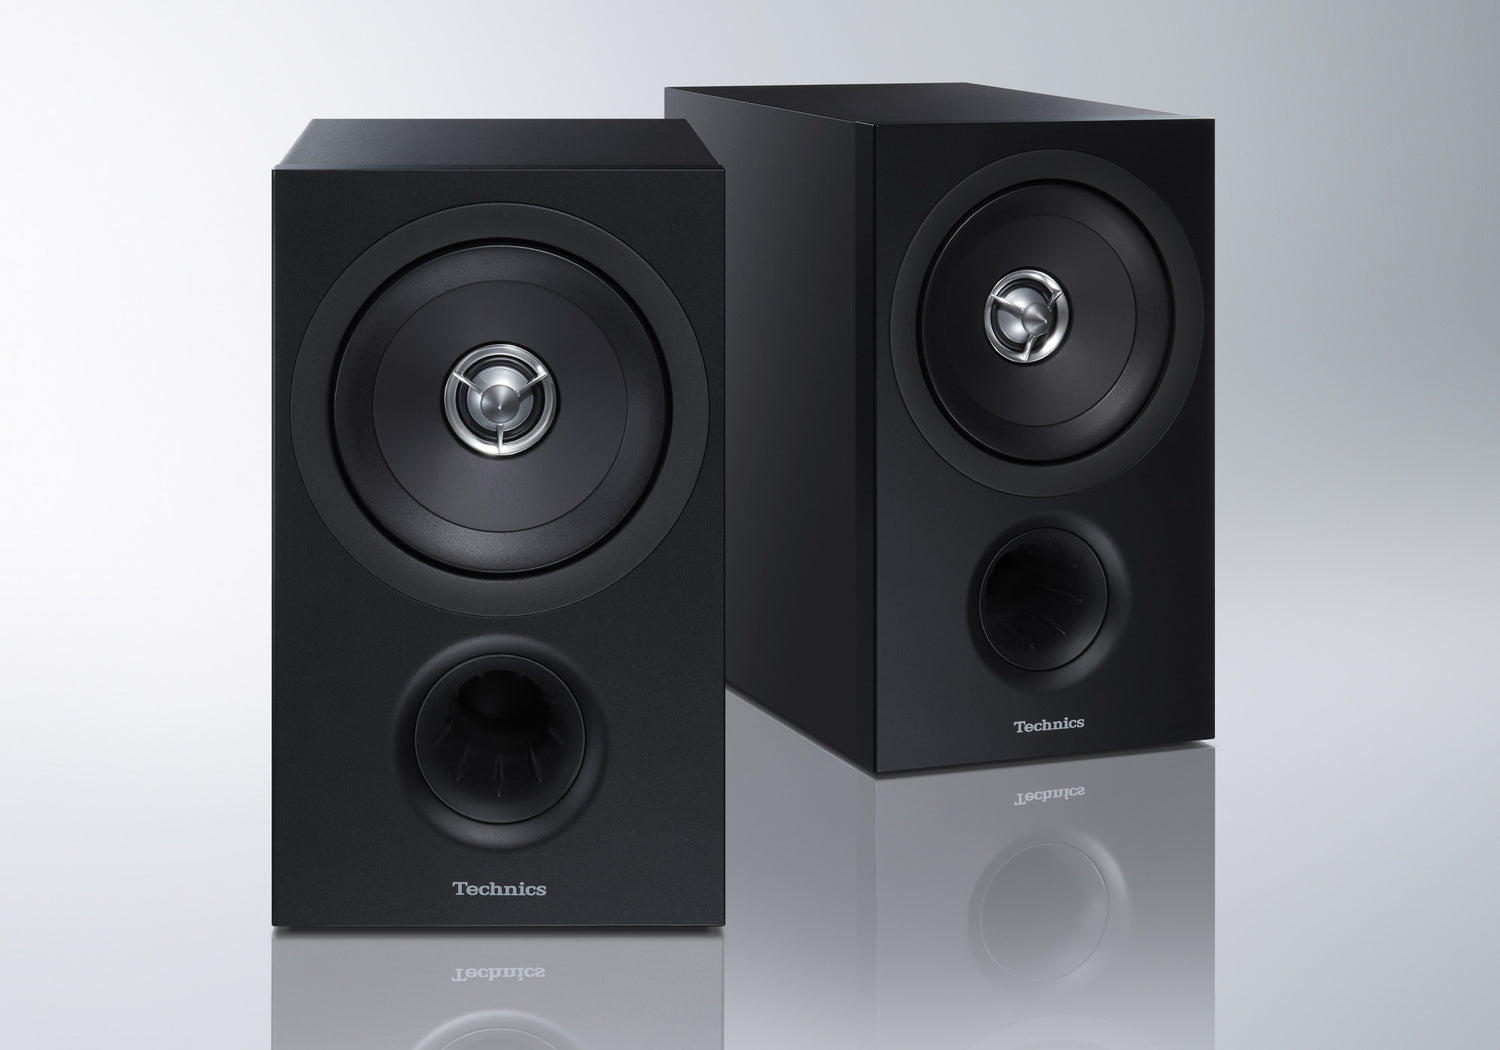 Technics Announces the New SB-C600 Bookshelf Speaker System as Part of the New Premium C600 Series